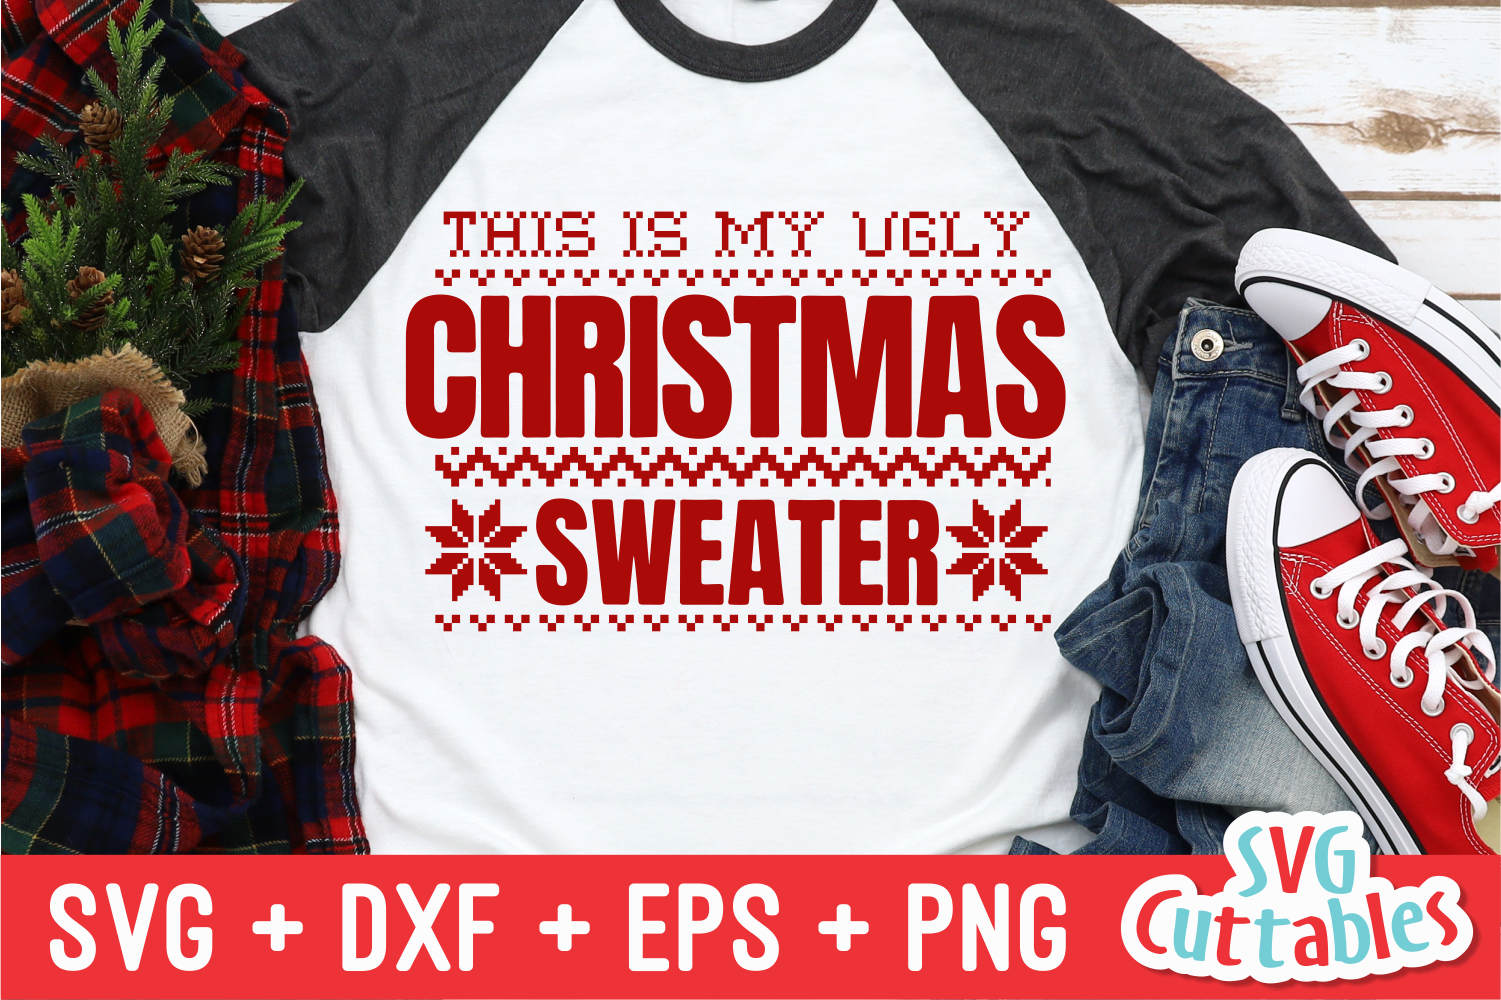 Christmas Shirt Designs Bundle | Christmas SVG Cut Files (382127) | Cut